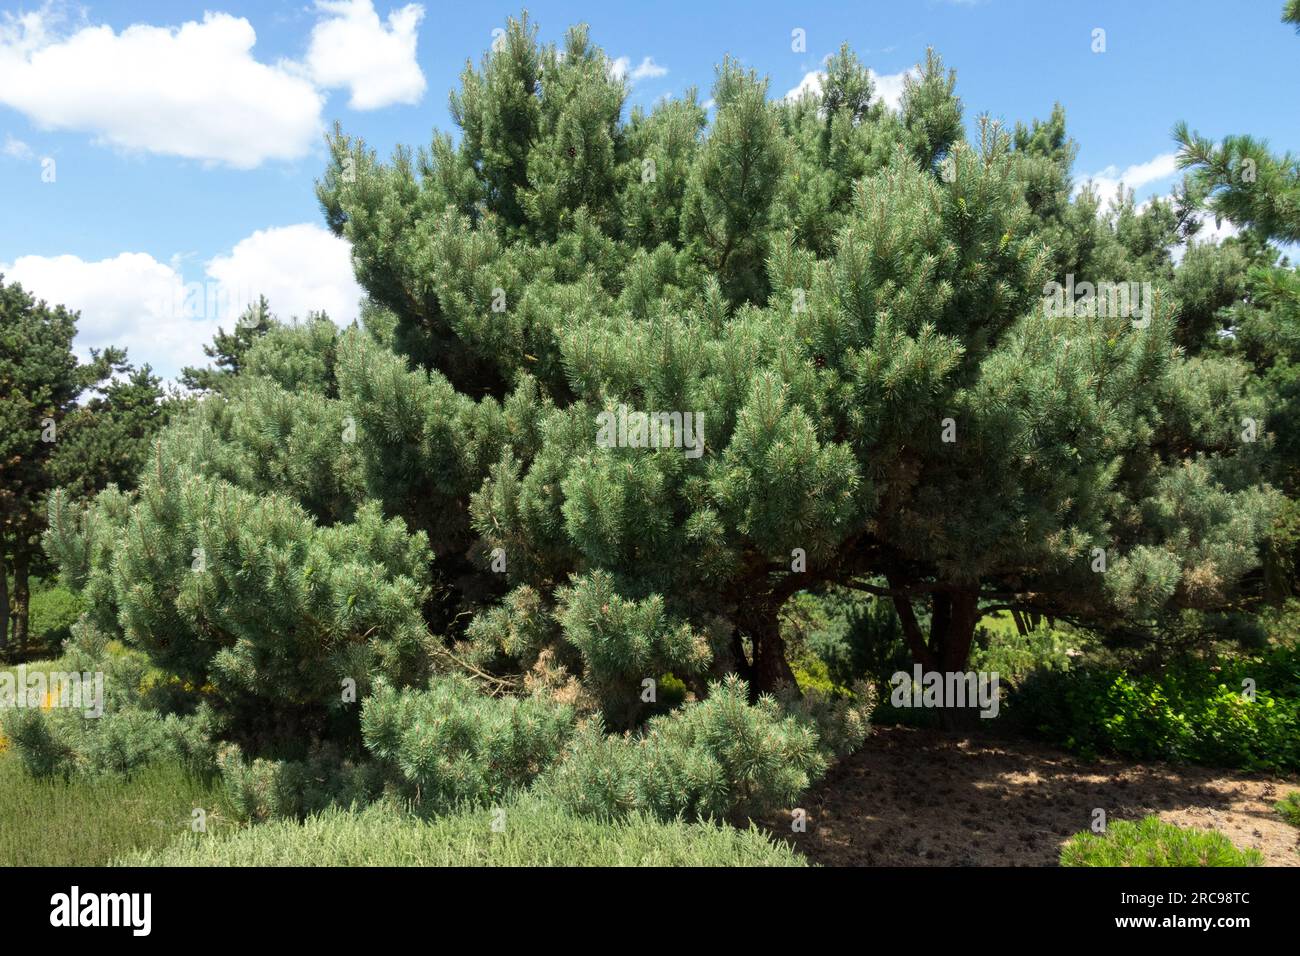 Old tree Pinus sylvestris 'Nana', Scots Pine spreading low tree crown Stock Photo